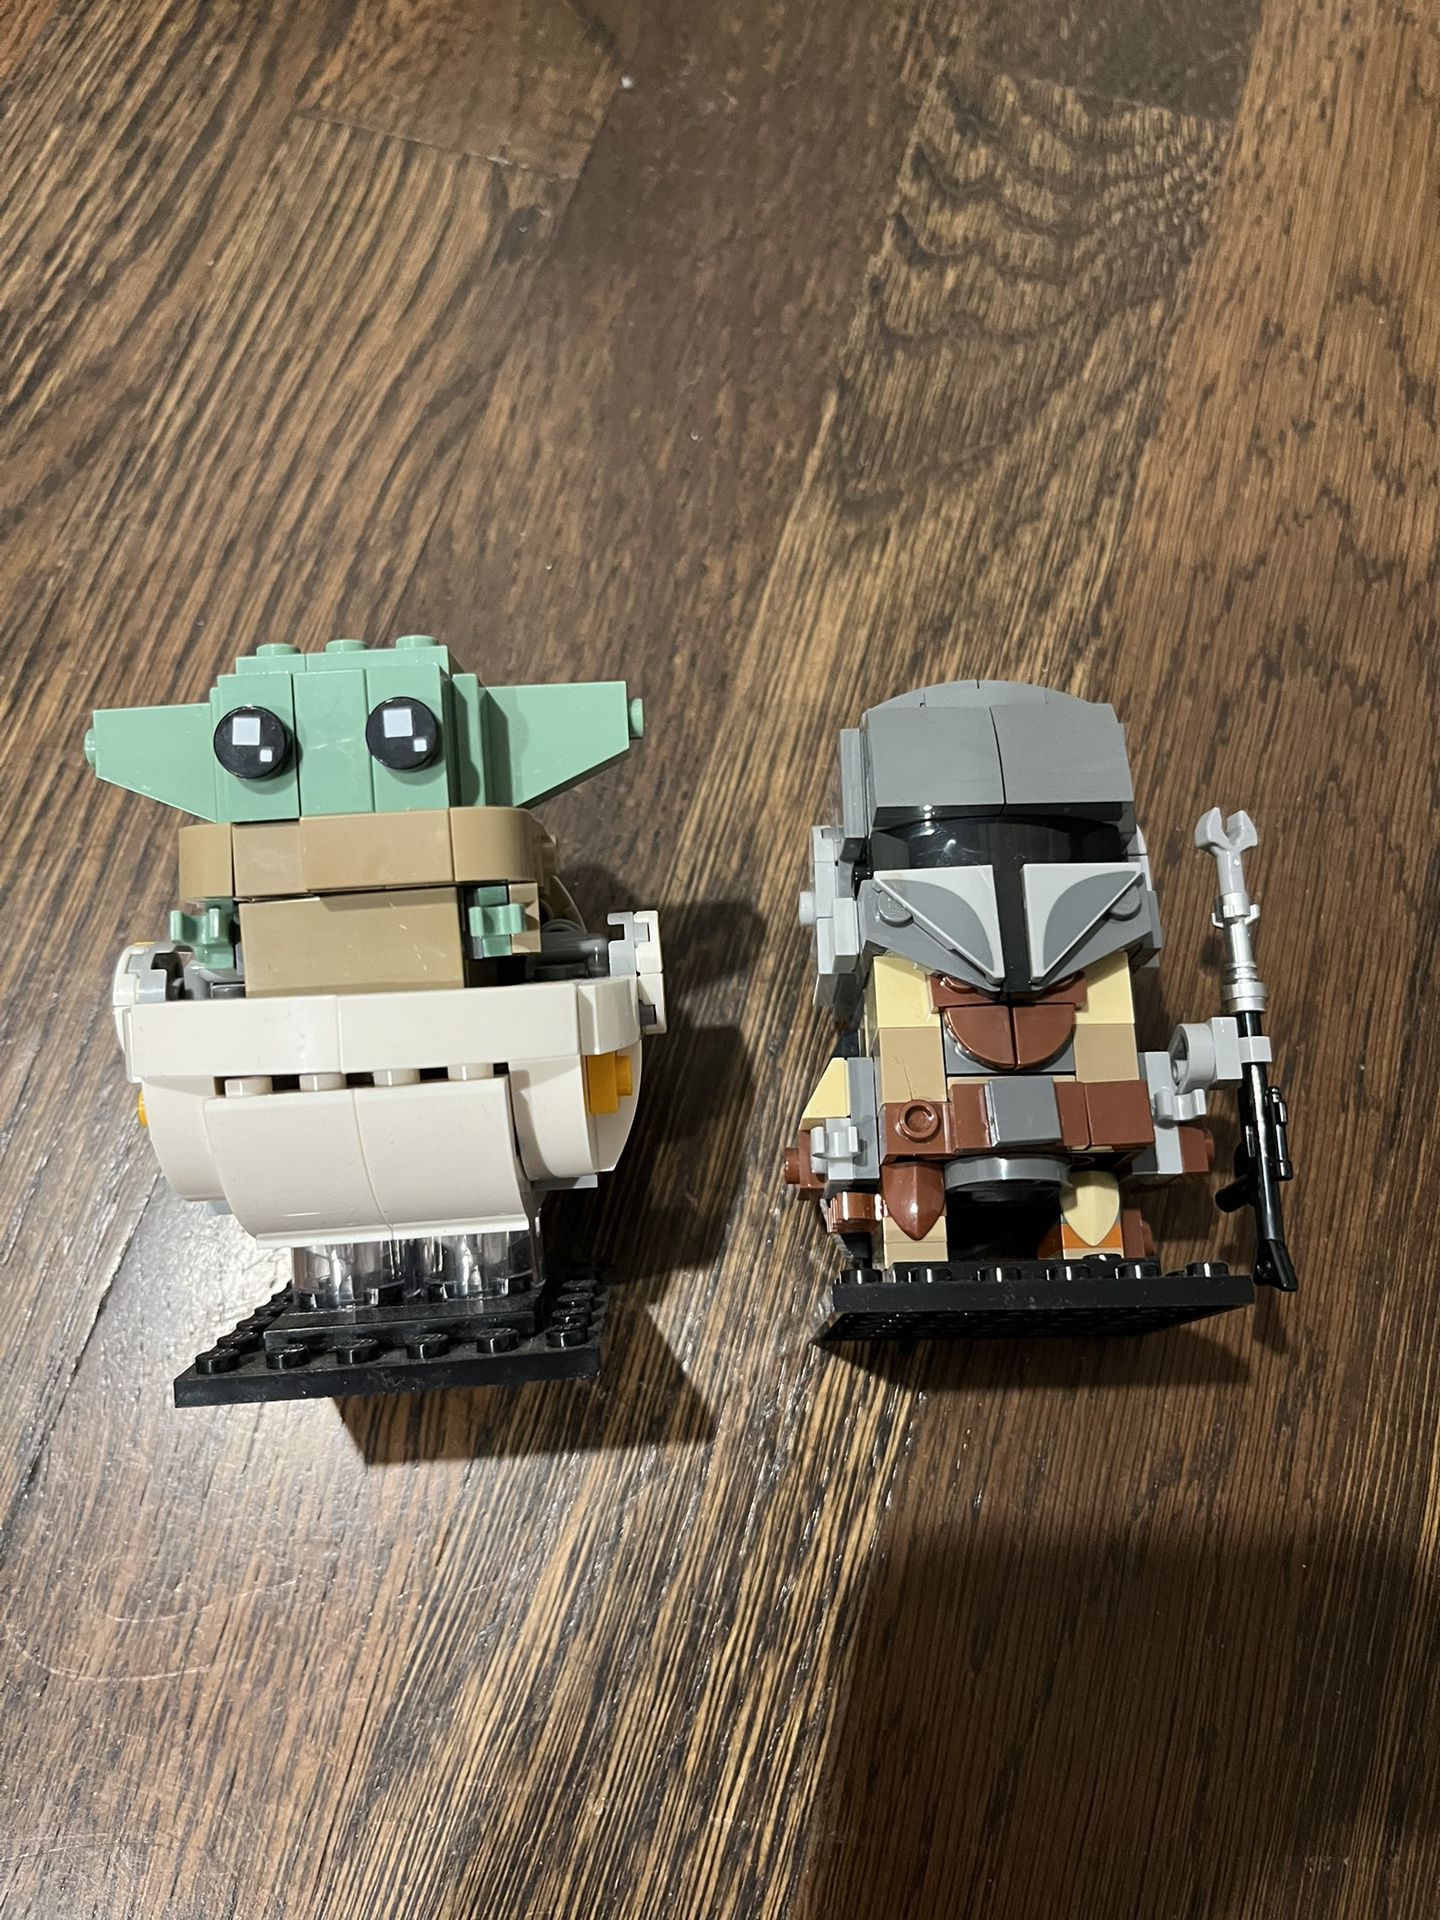 Lego BrickHeadz Star Wars